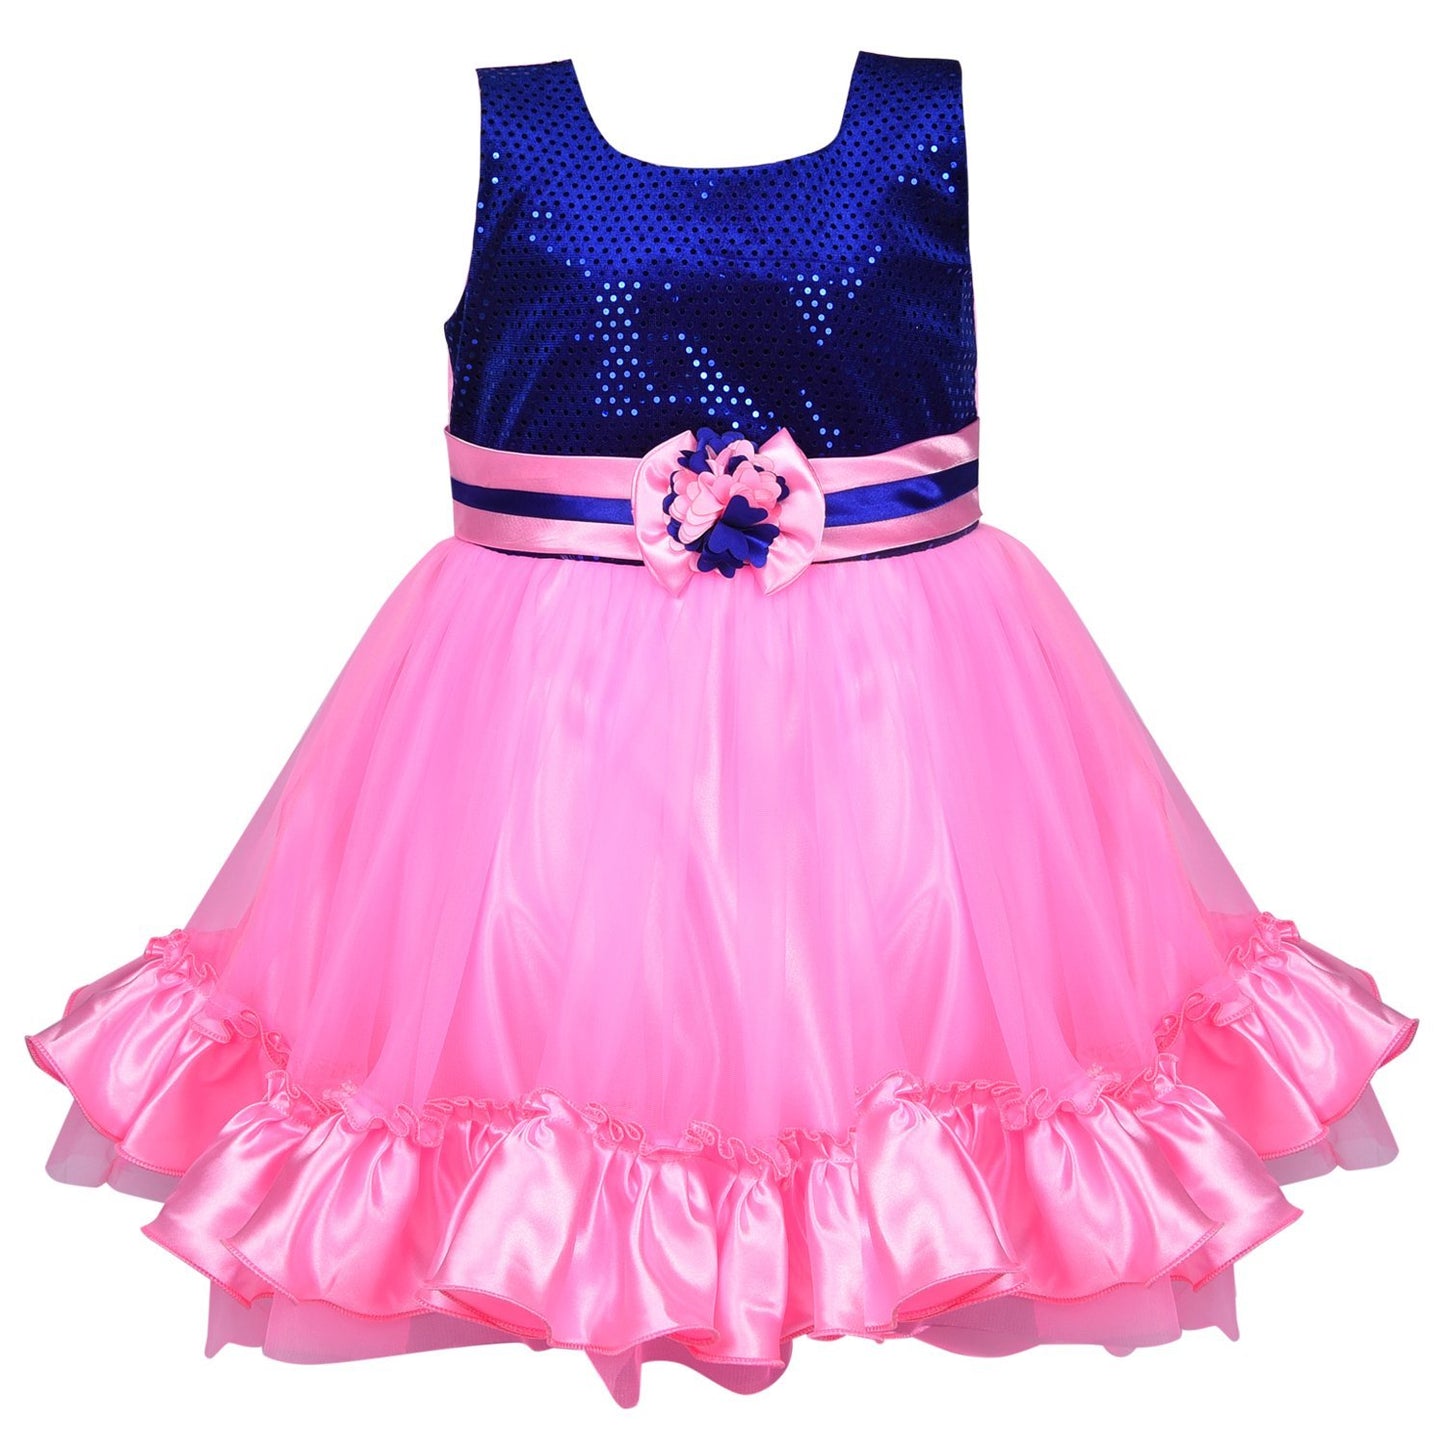 Baby Girls Party Wear Frock Dress fr130pnk -  Wish Karo Dresses